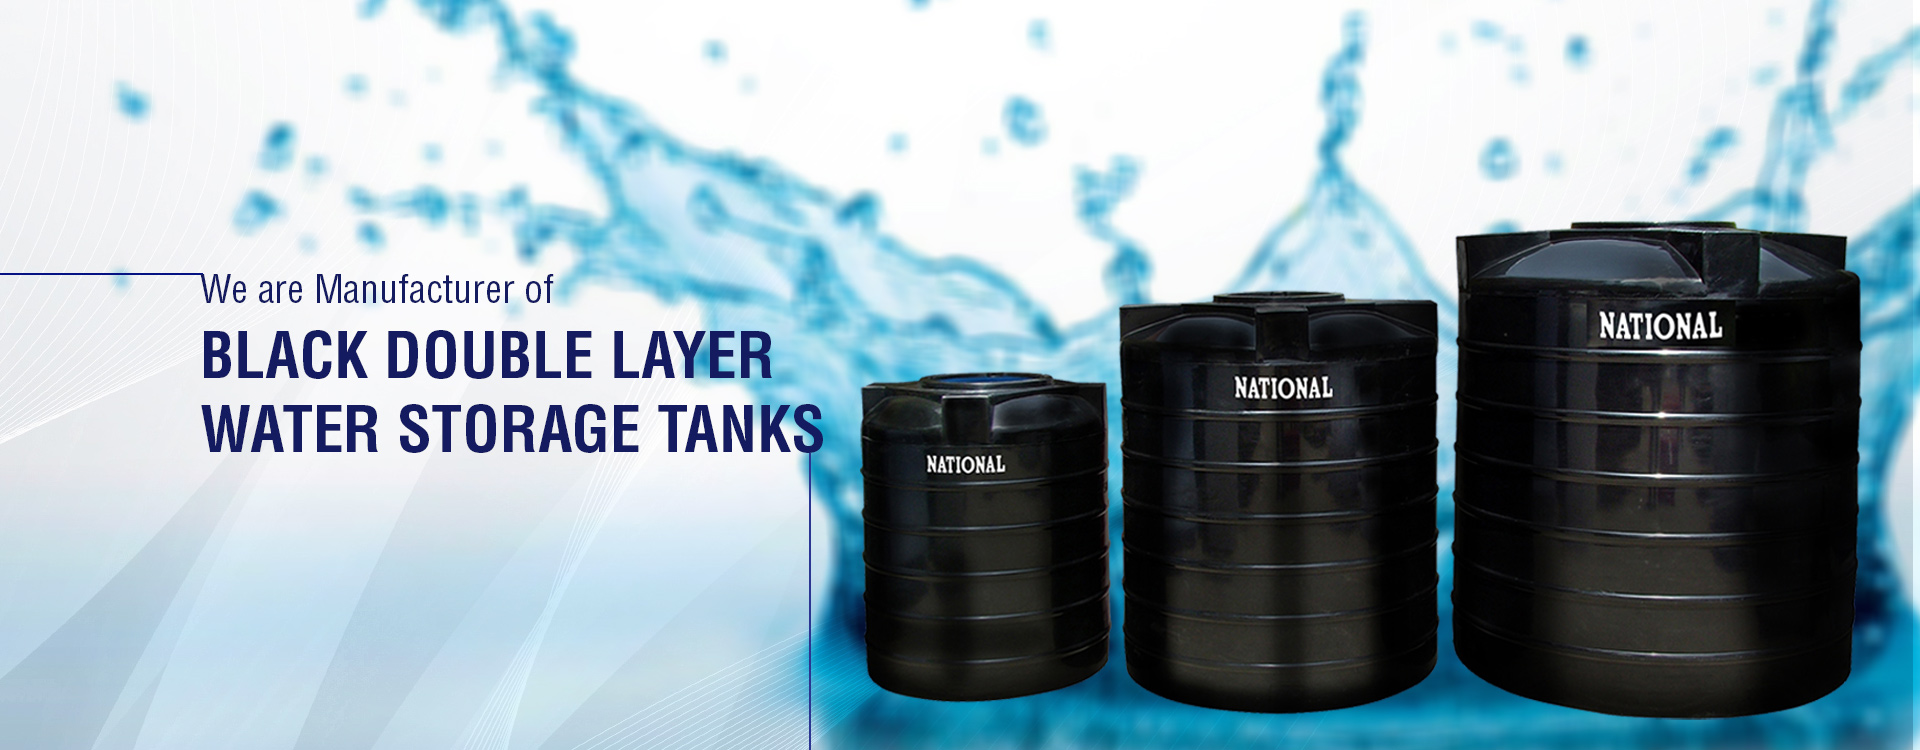 Black Double Layer Water Storage Tanks